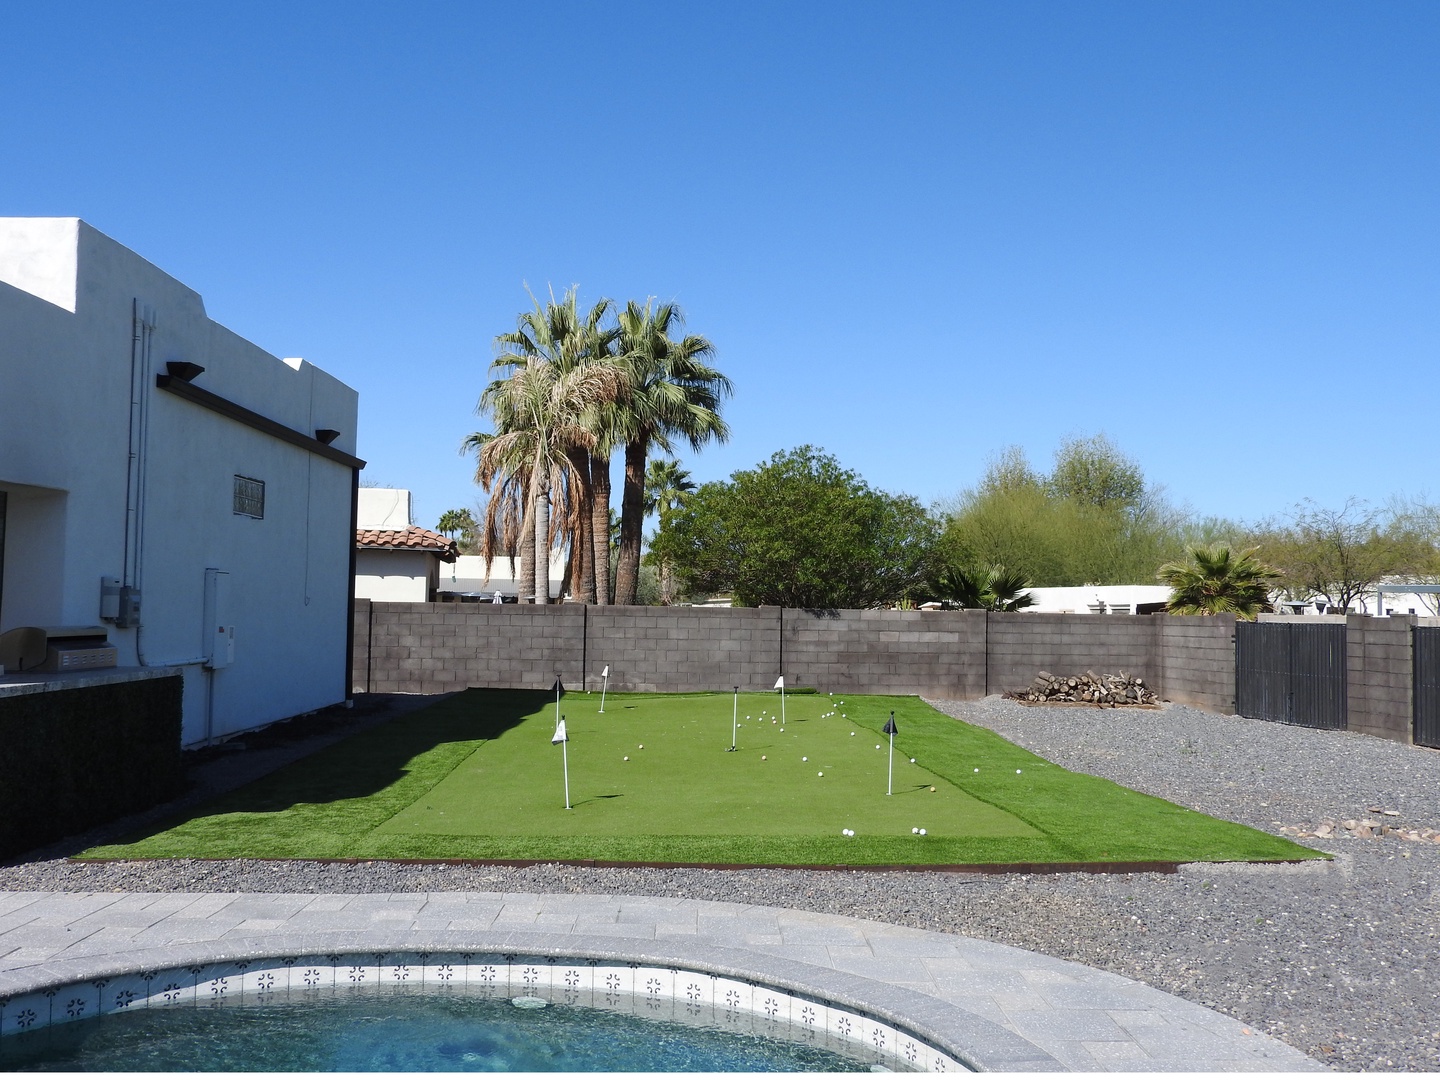 Savor the backyard oasis with pool, basketball court and putting green